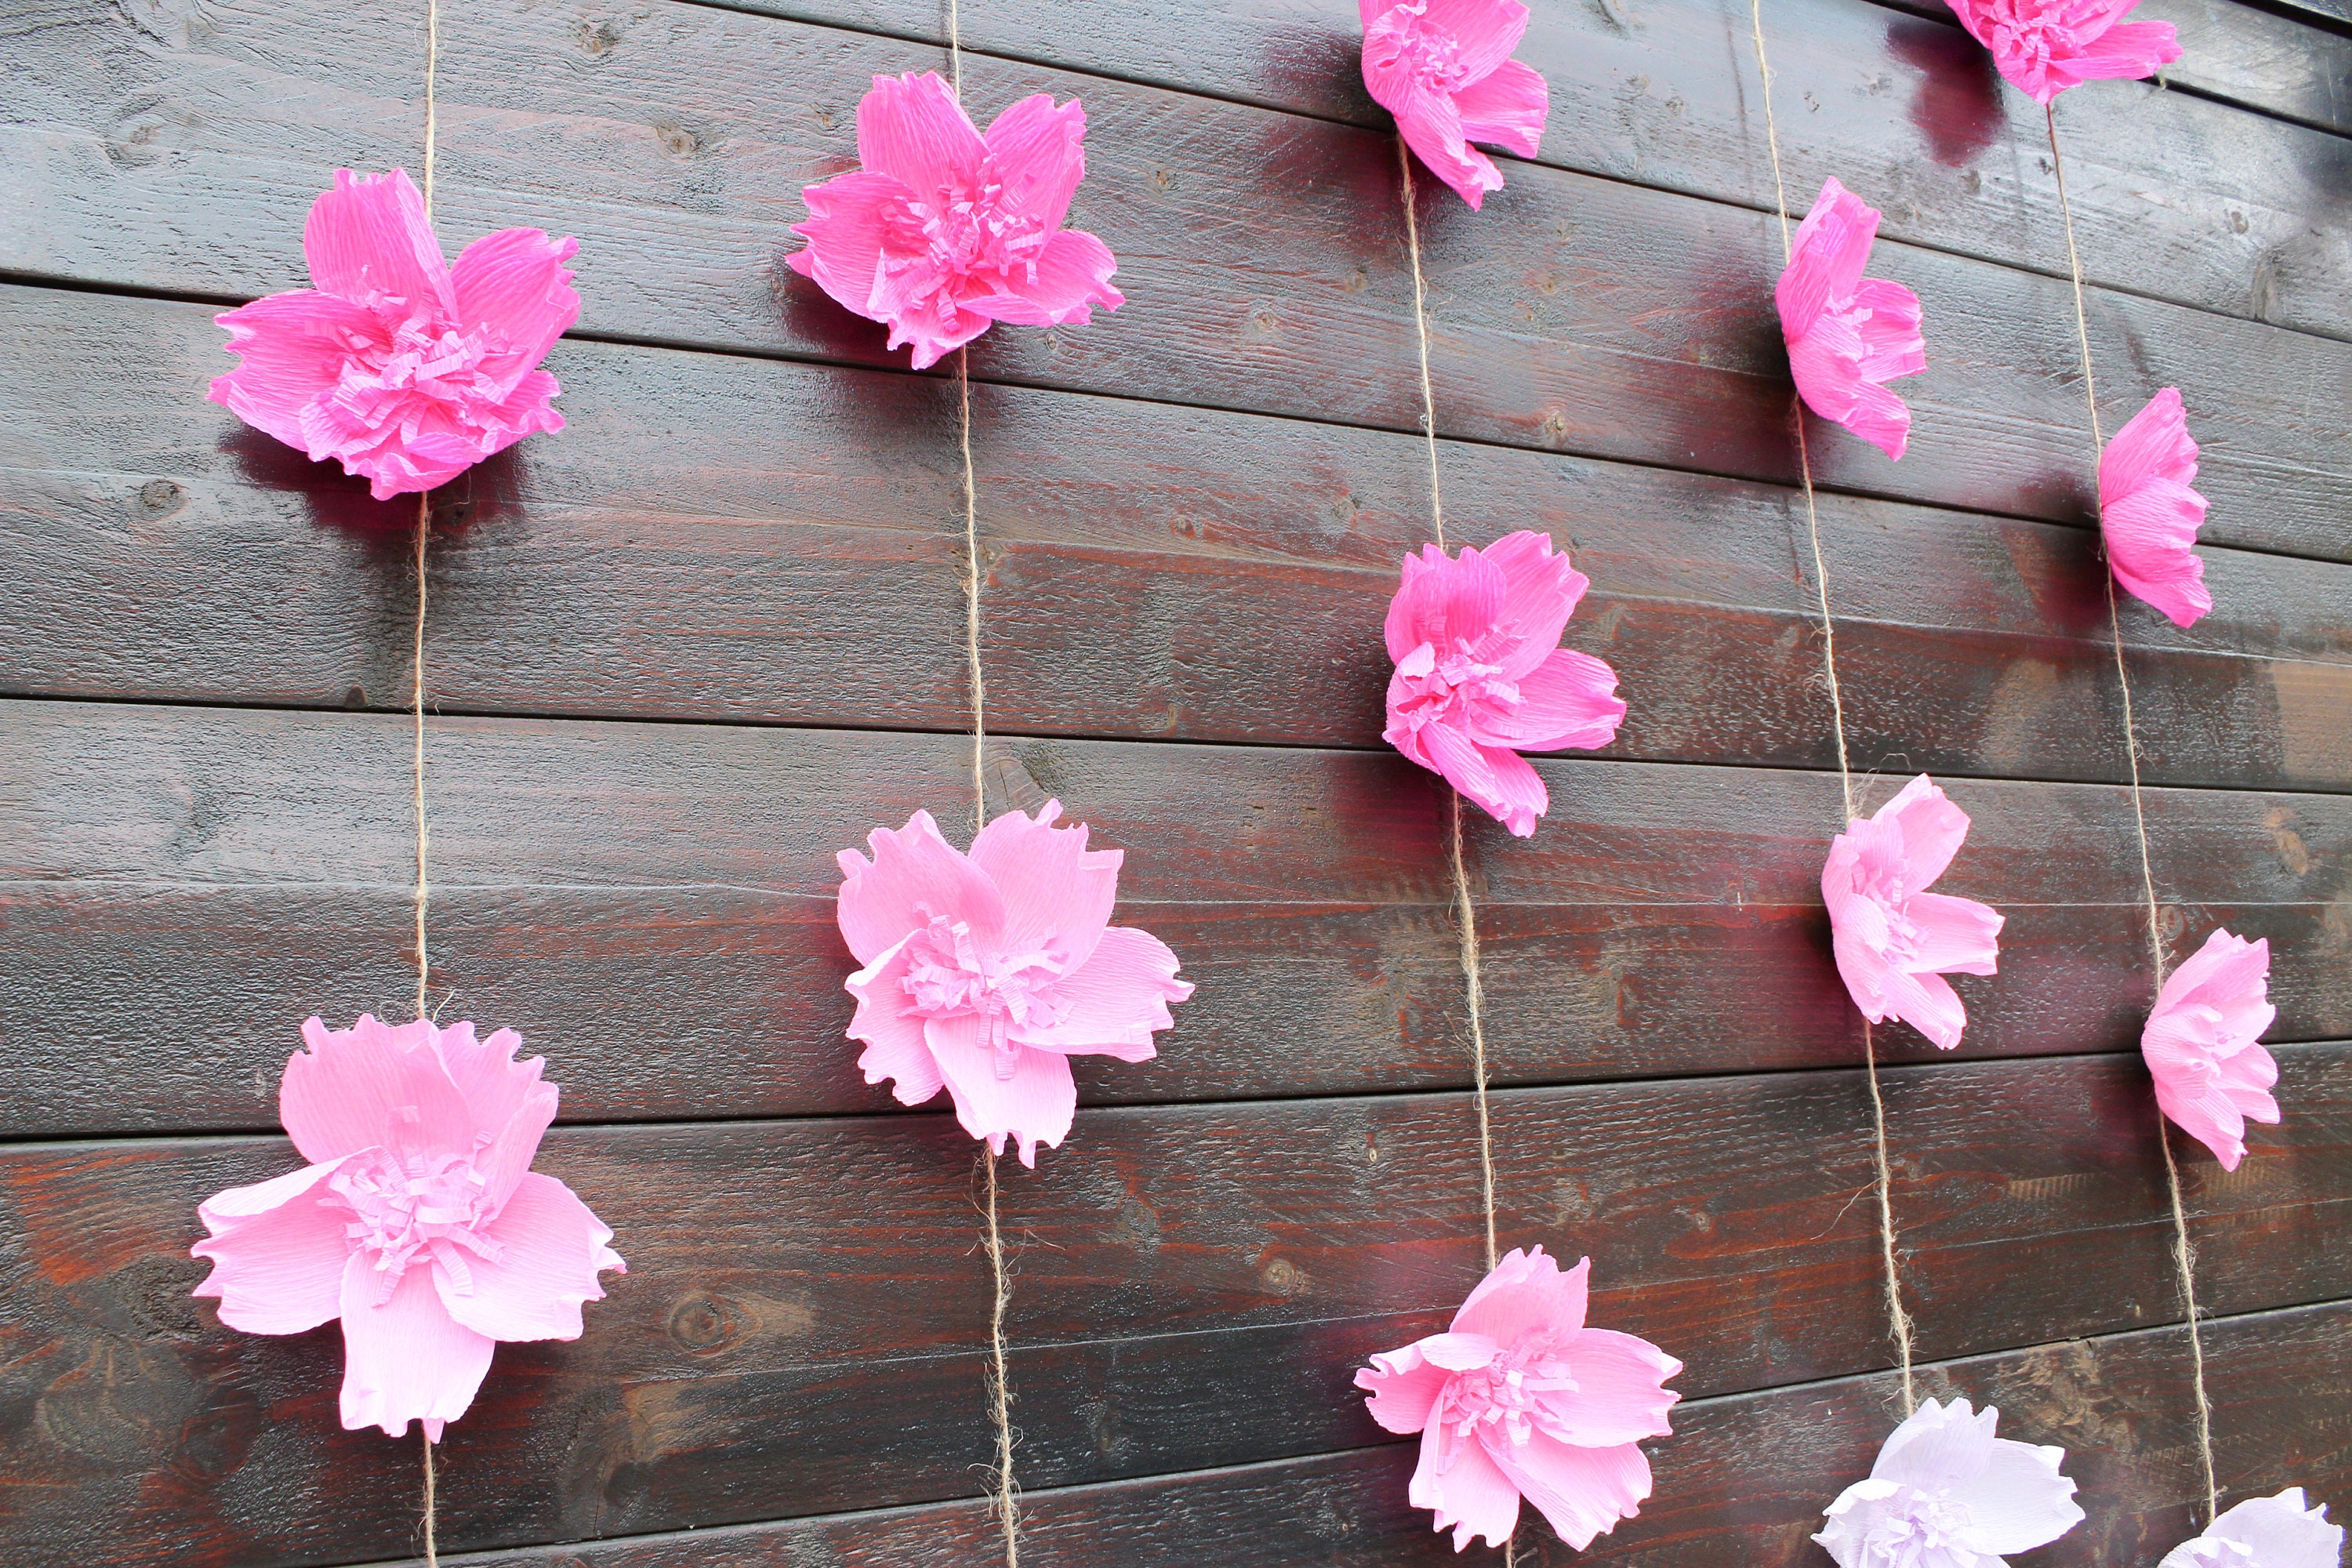 Violet Studio Rainbow Blooms Paper Flower Garland Kit, 20 Pieces